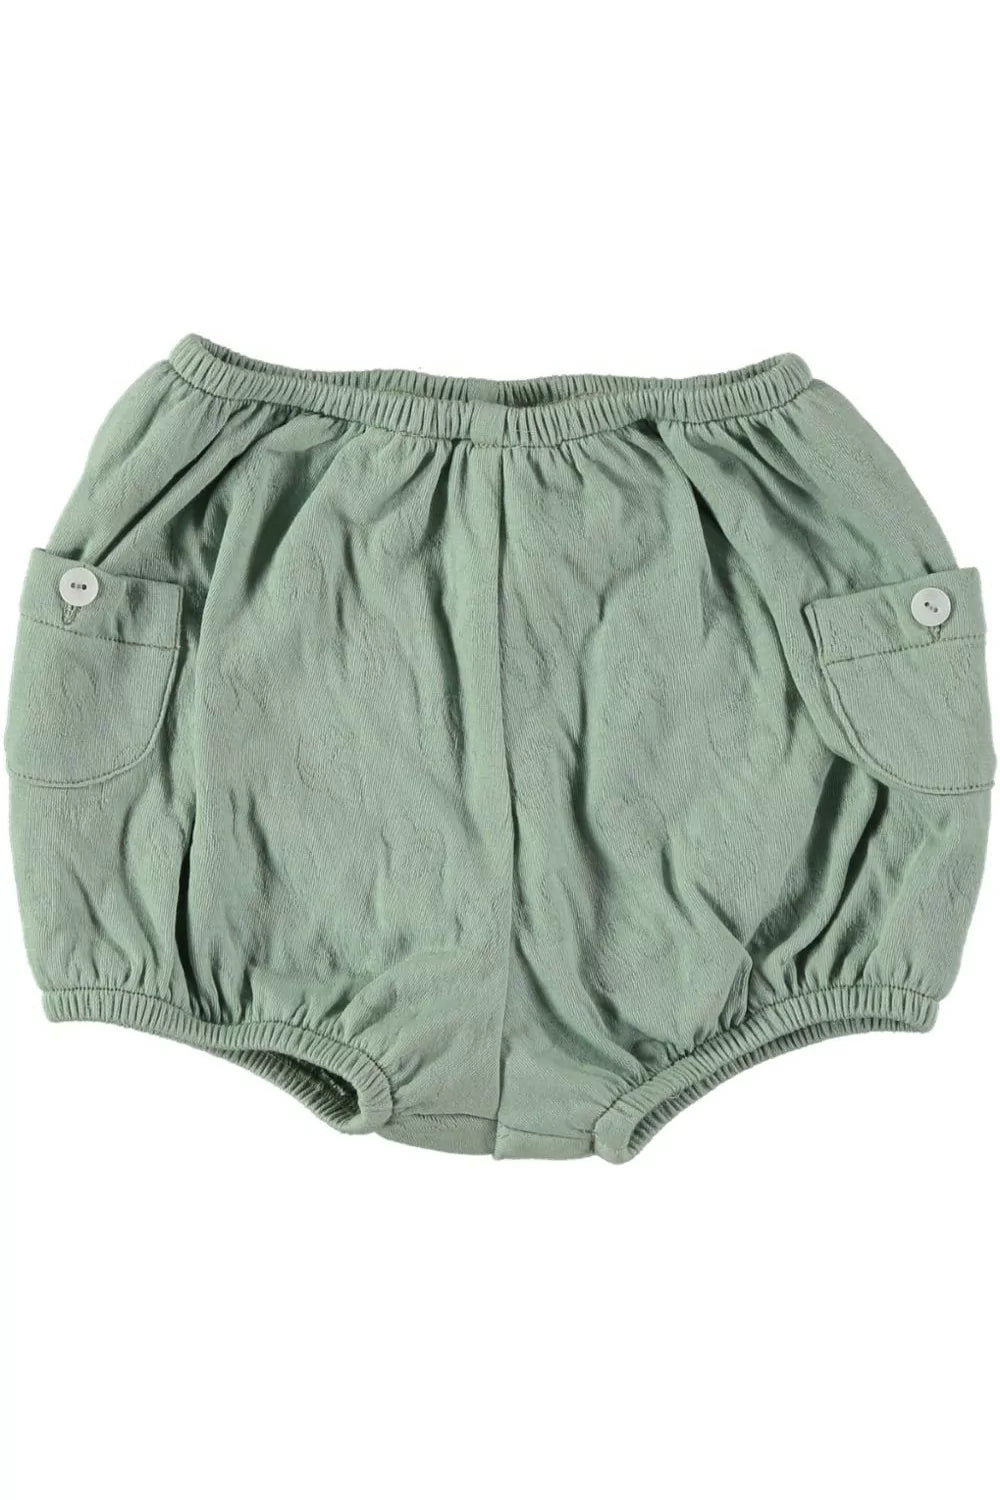 Tenor Shorts | Sage Green